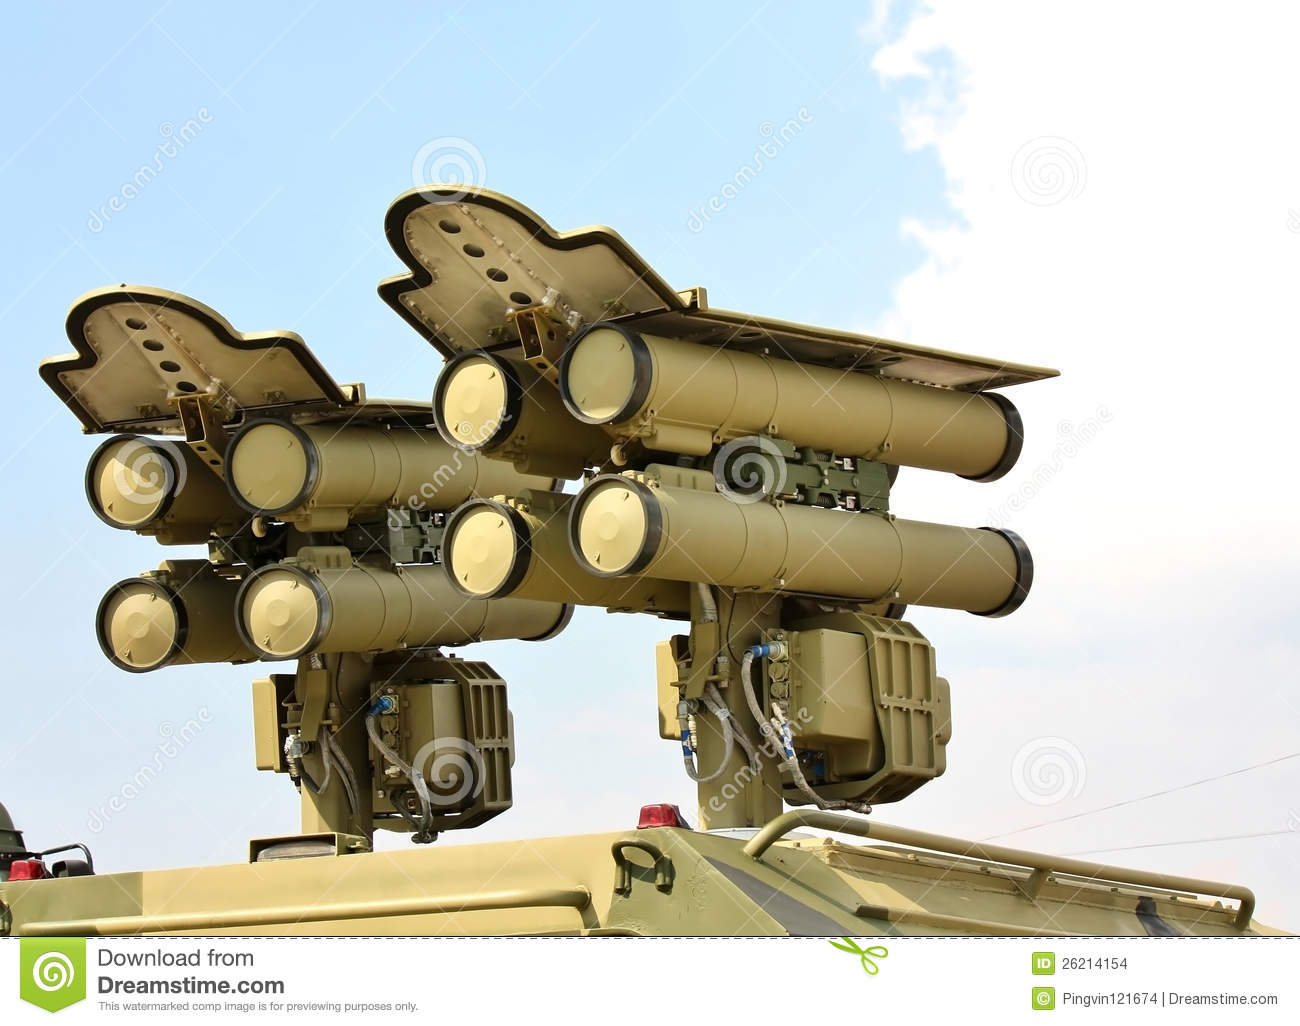 antitank-missile-system-26214154.jpg